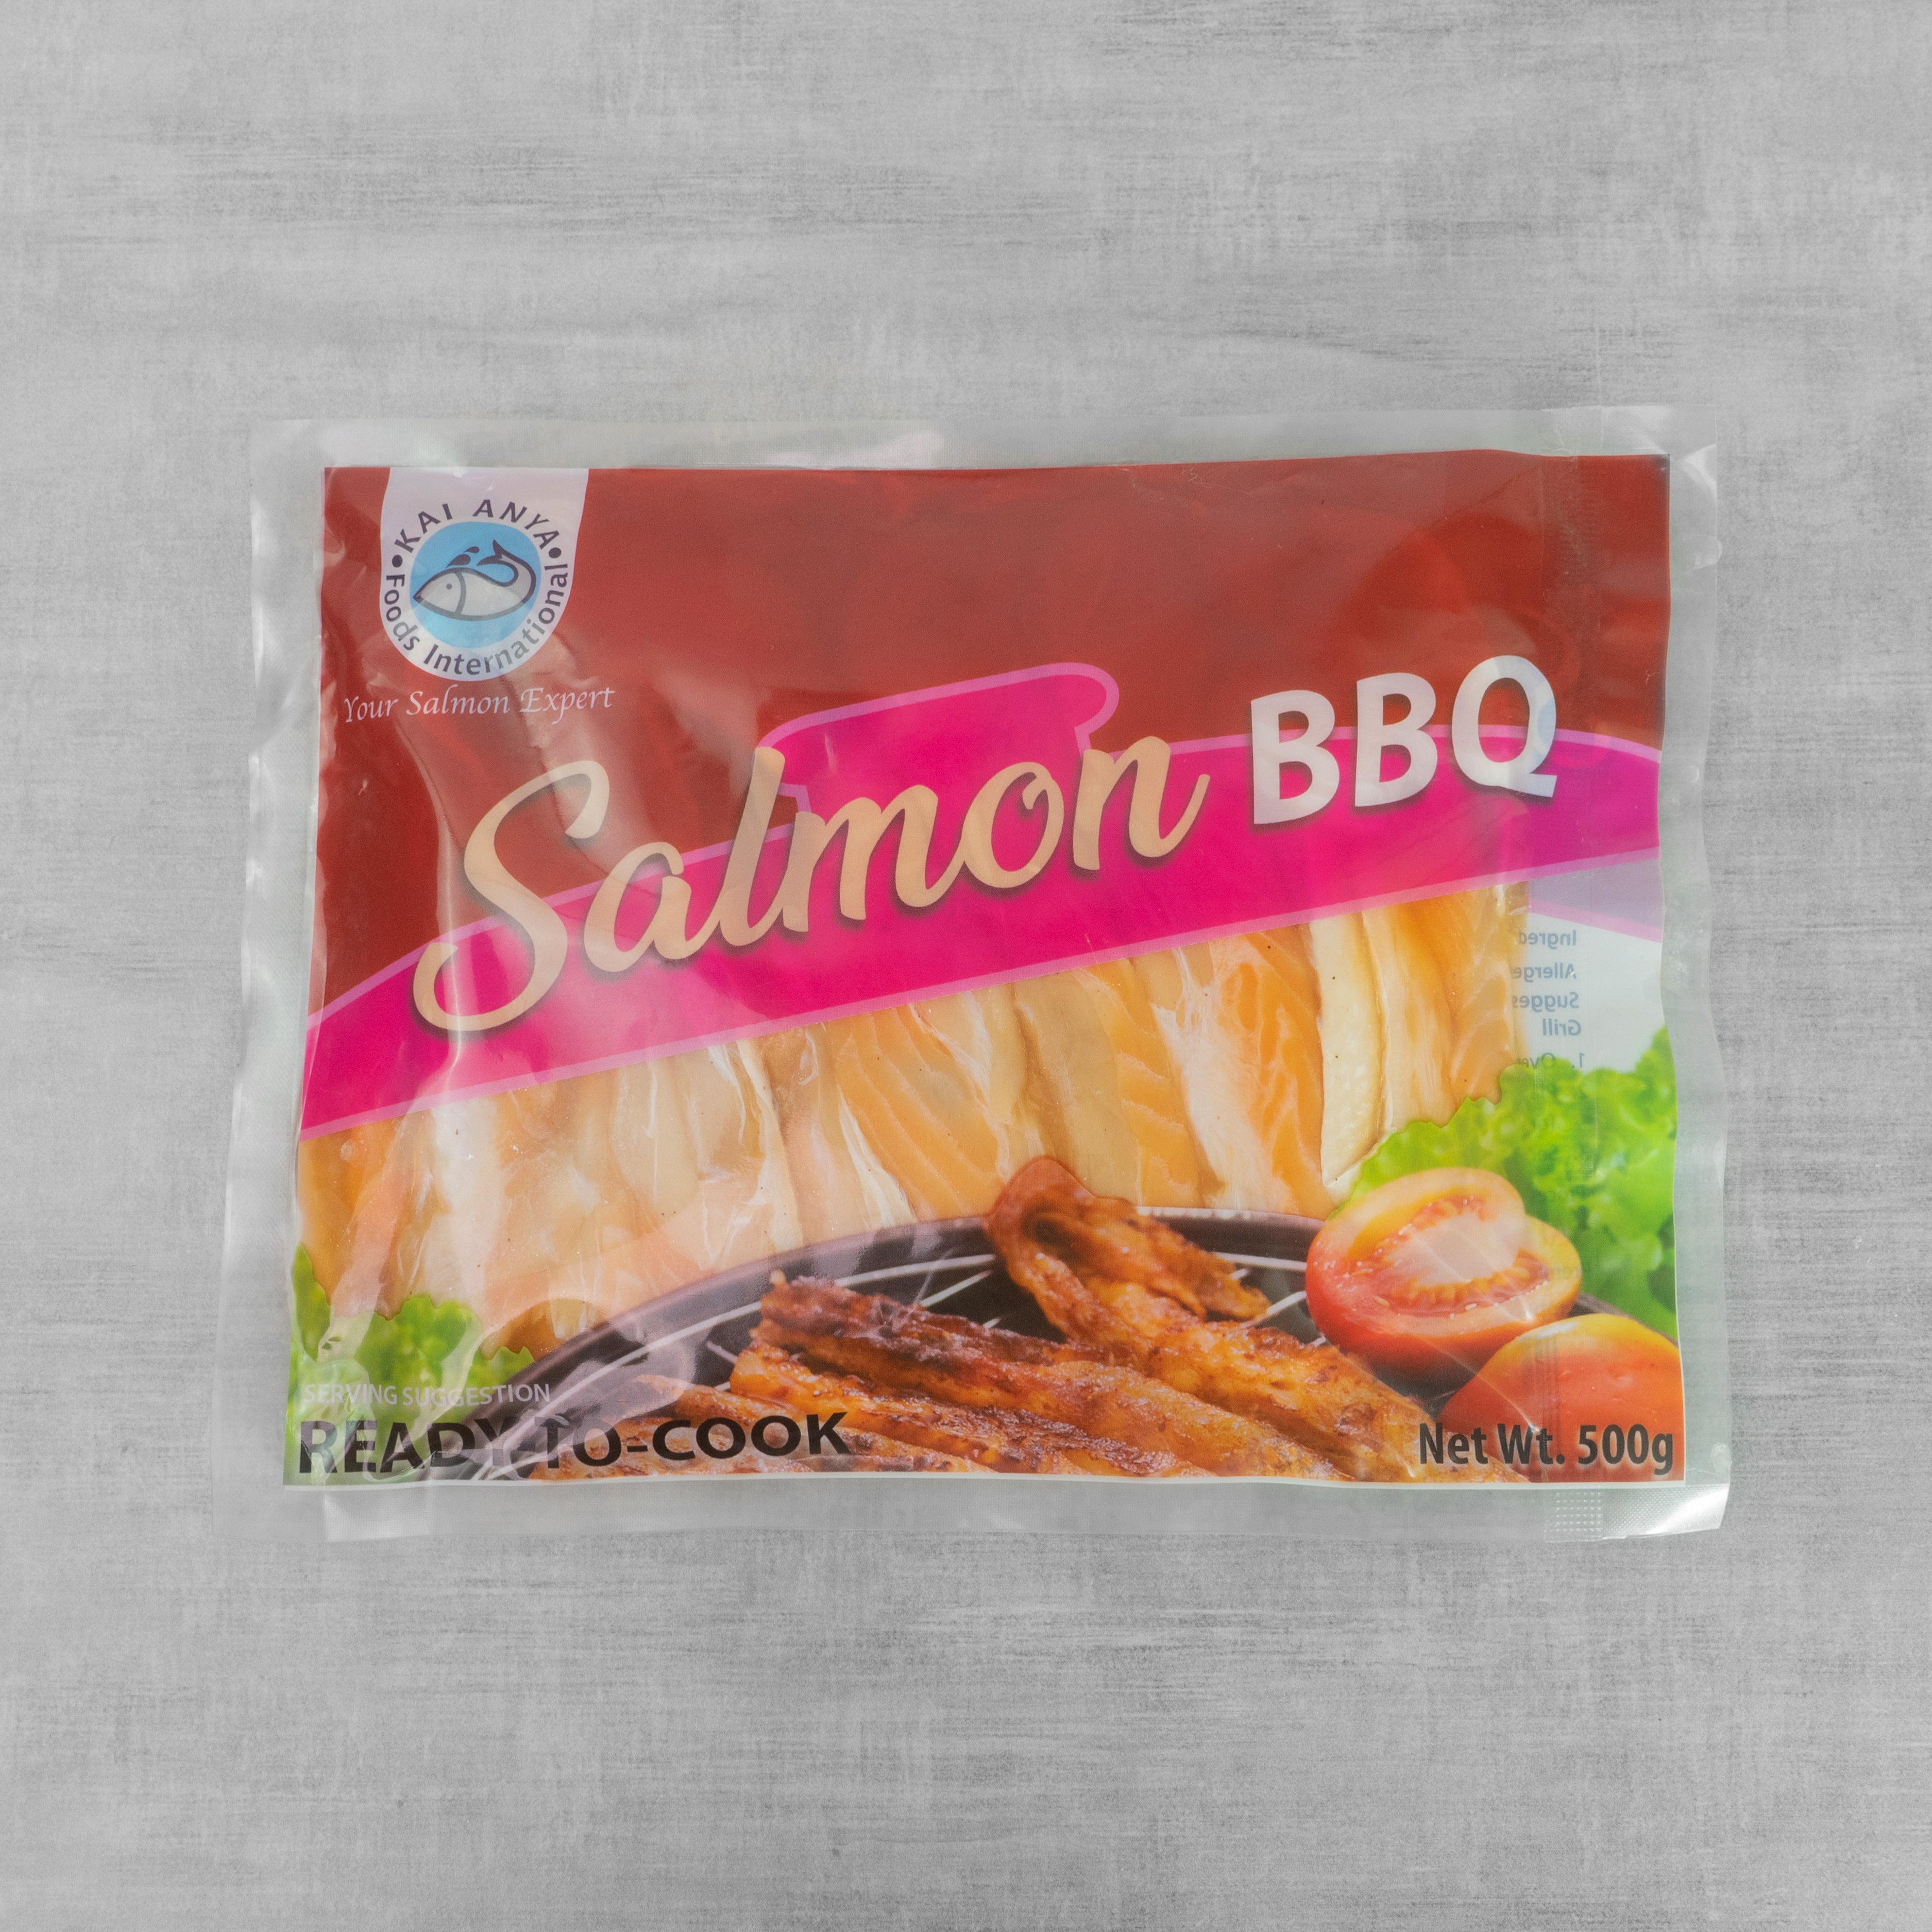 Kai Anya Salmon BBQ